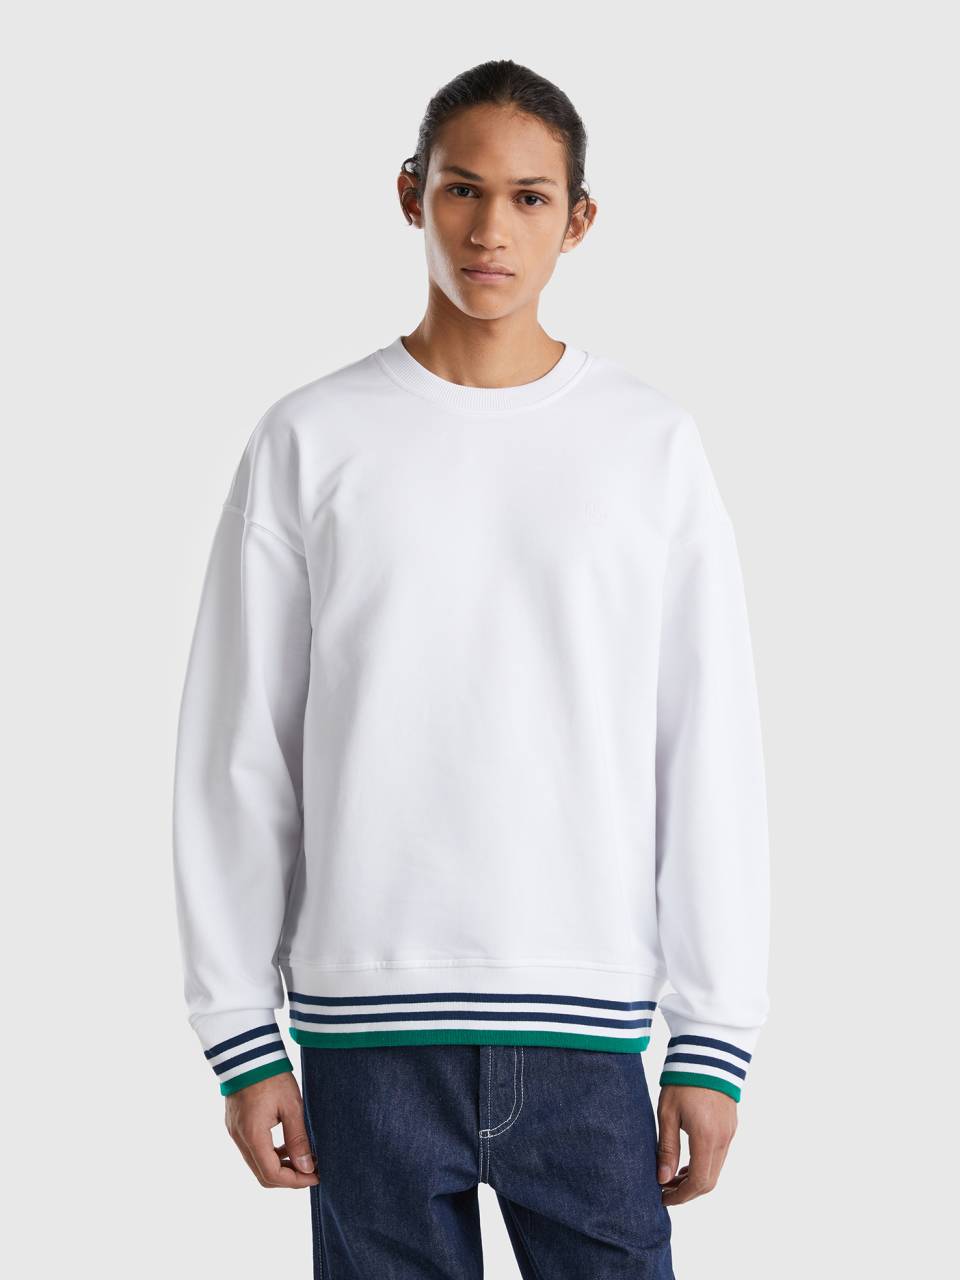 Benetton crew neck sweatshirt in pure cotton. 1